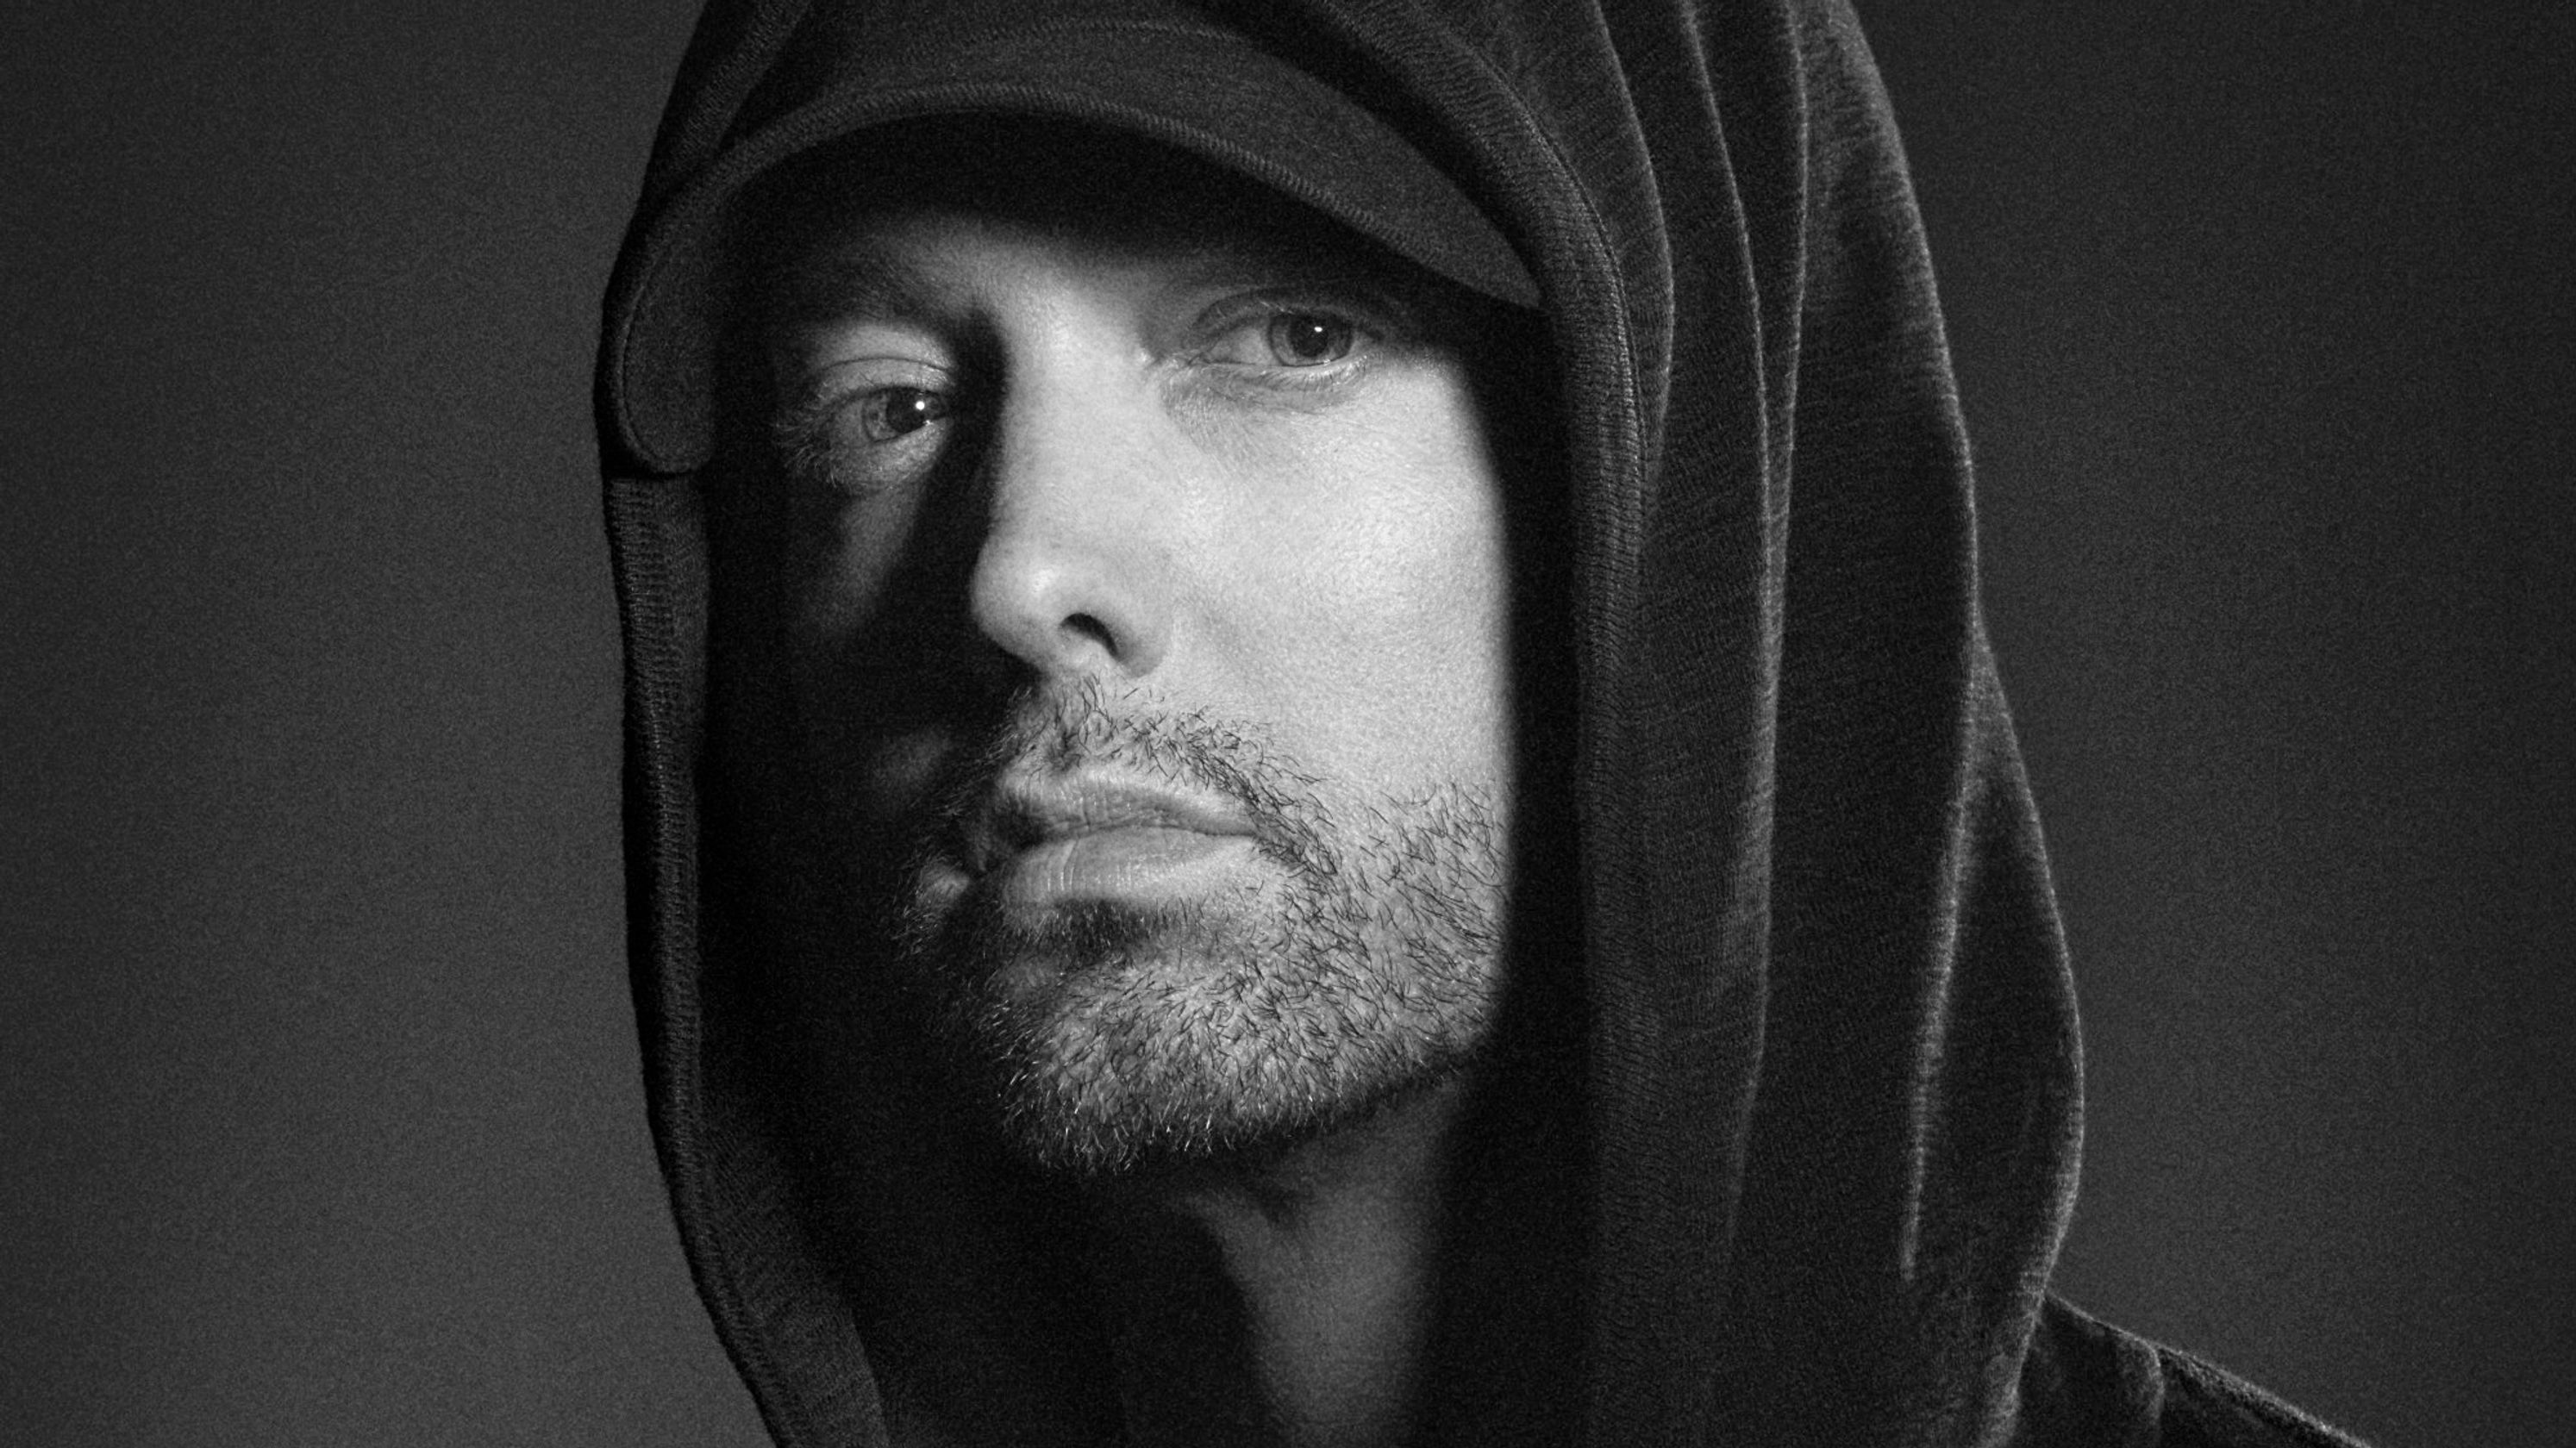 Eminem HD Wallpaper | Background Image | 2988x1680 | ID ...